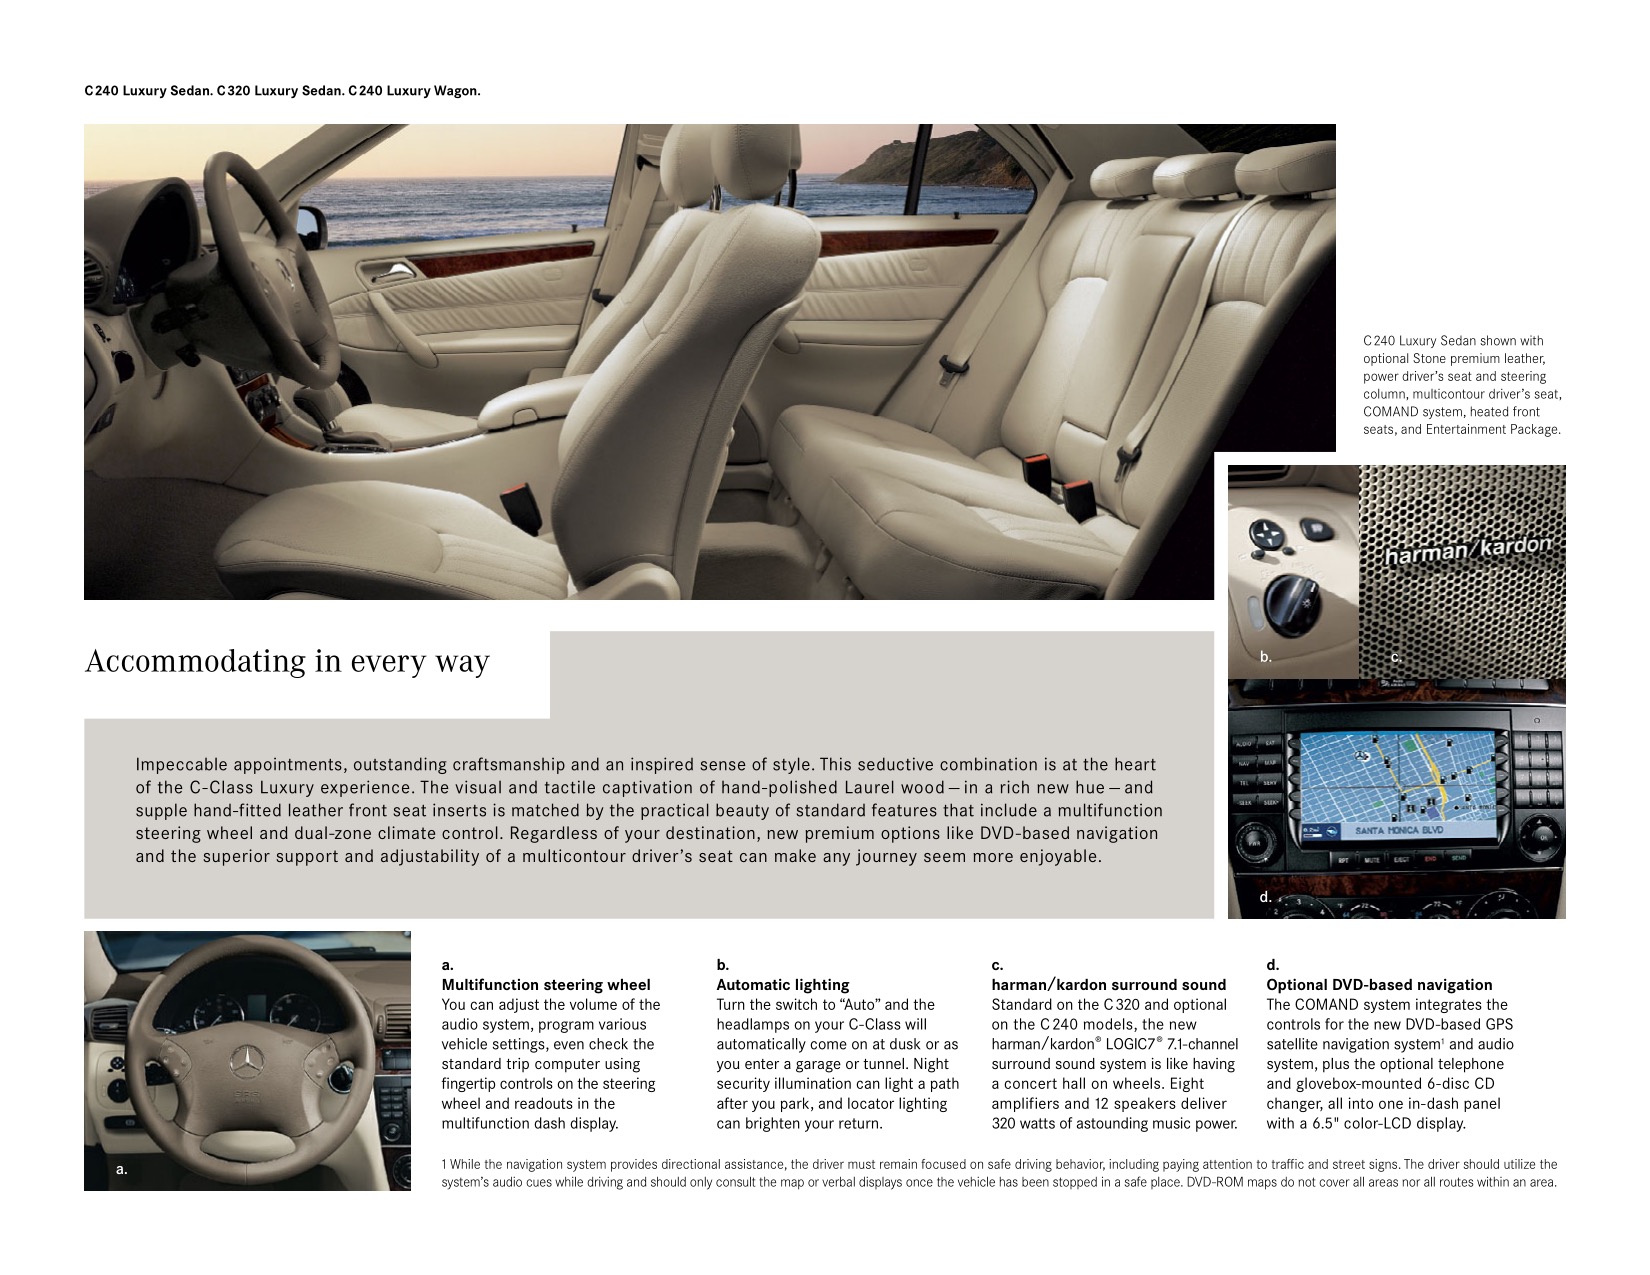 2005 Mercedes-Benz C-Class Luxury Brochure Page 22